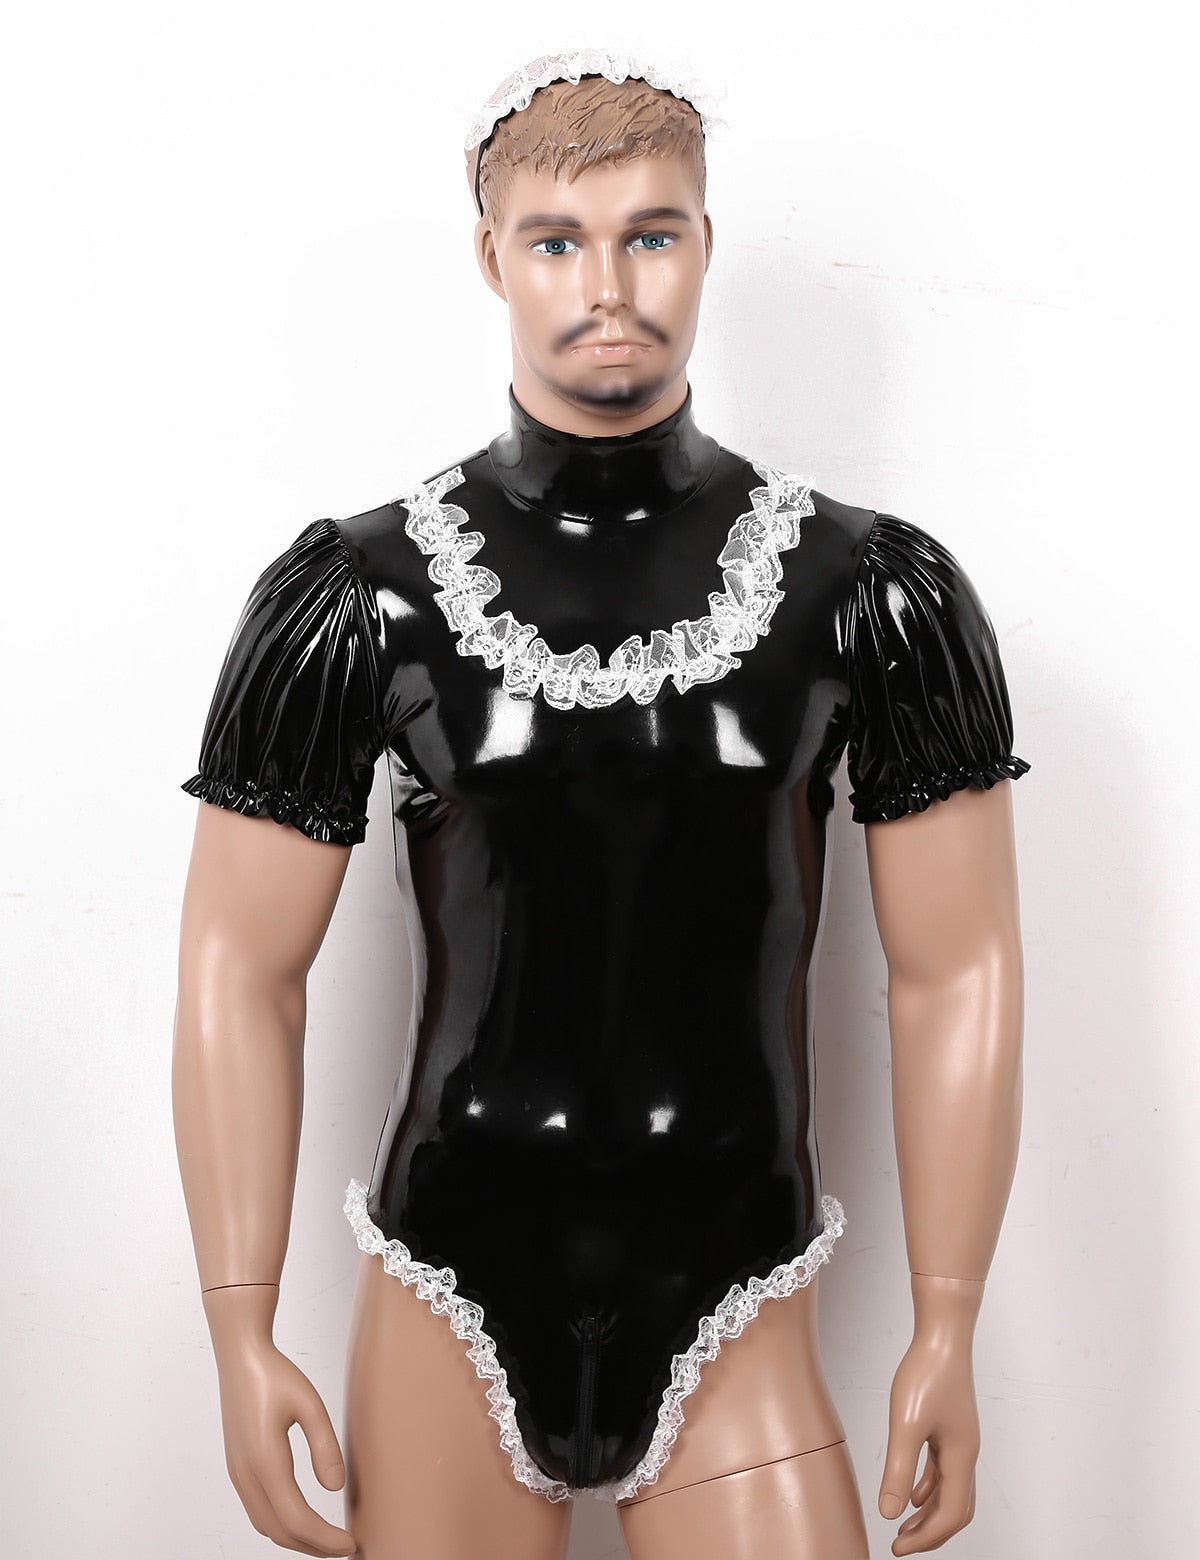 Sexy Sissy Bodysuit: Tempting Nightwear for Men